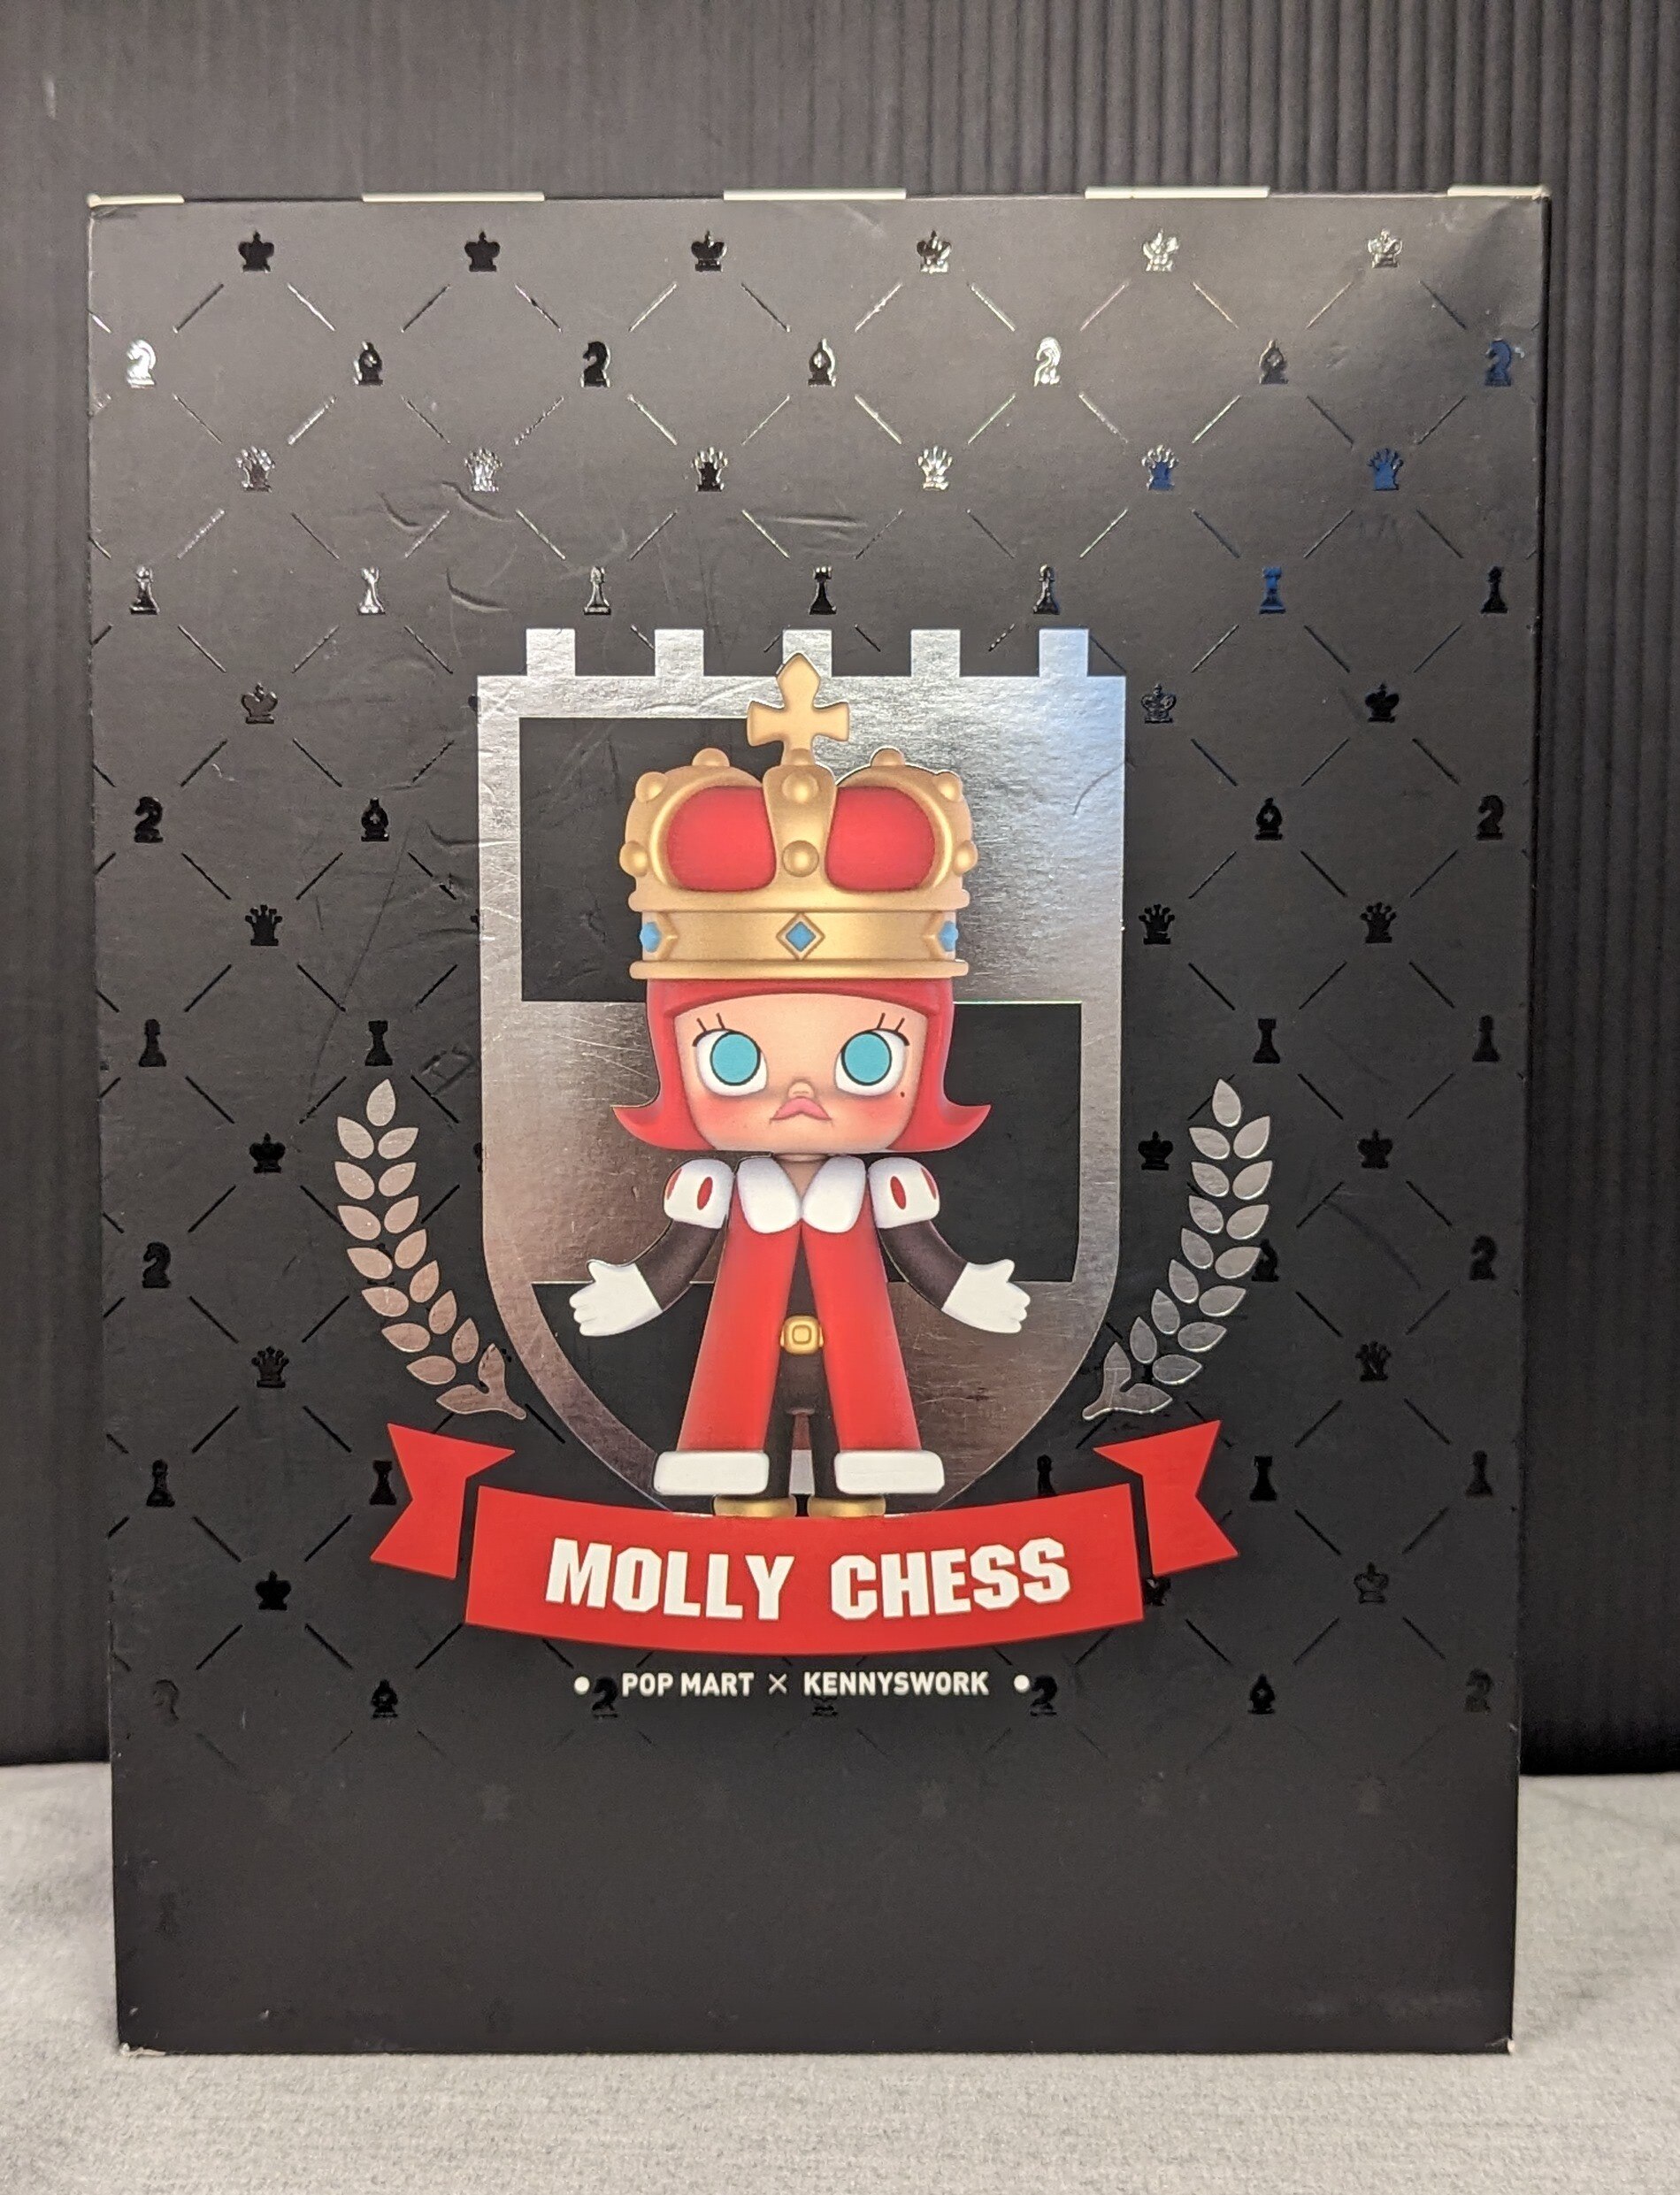 POP MART x KENNYSWORK Molly Chess Pawn Blue Mini Figure Designer Art Toy  New